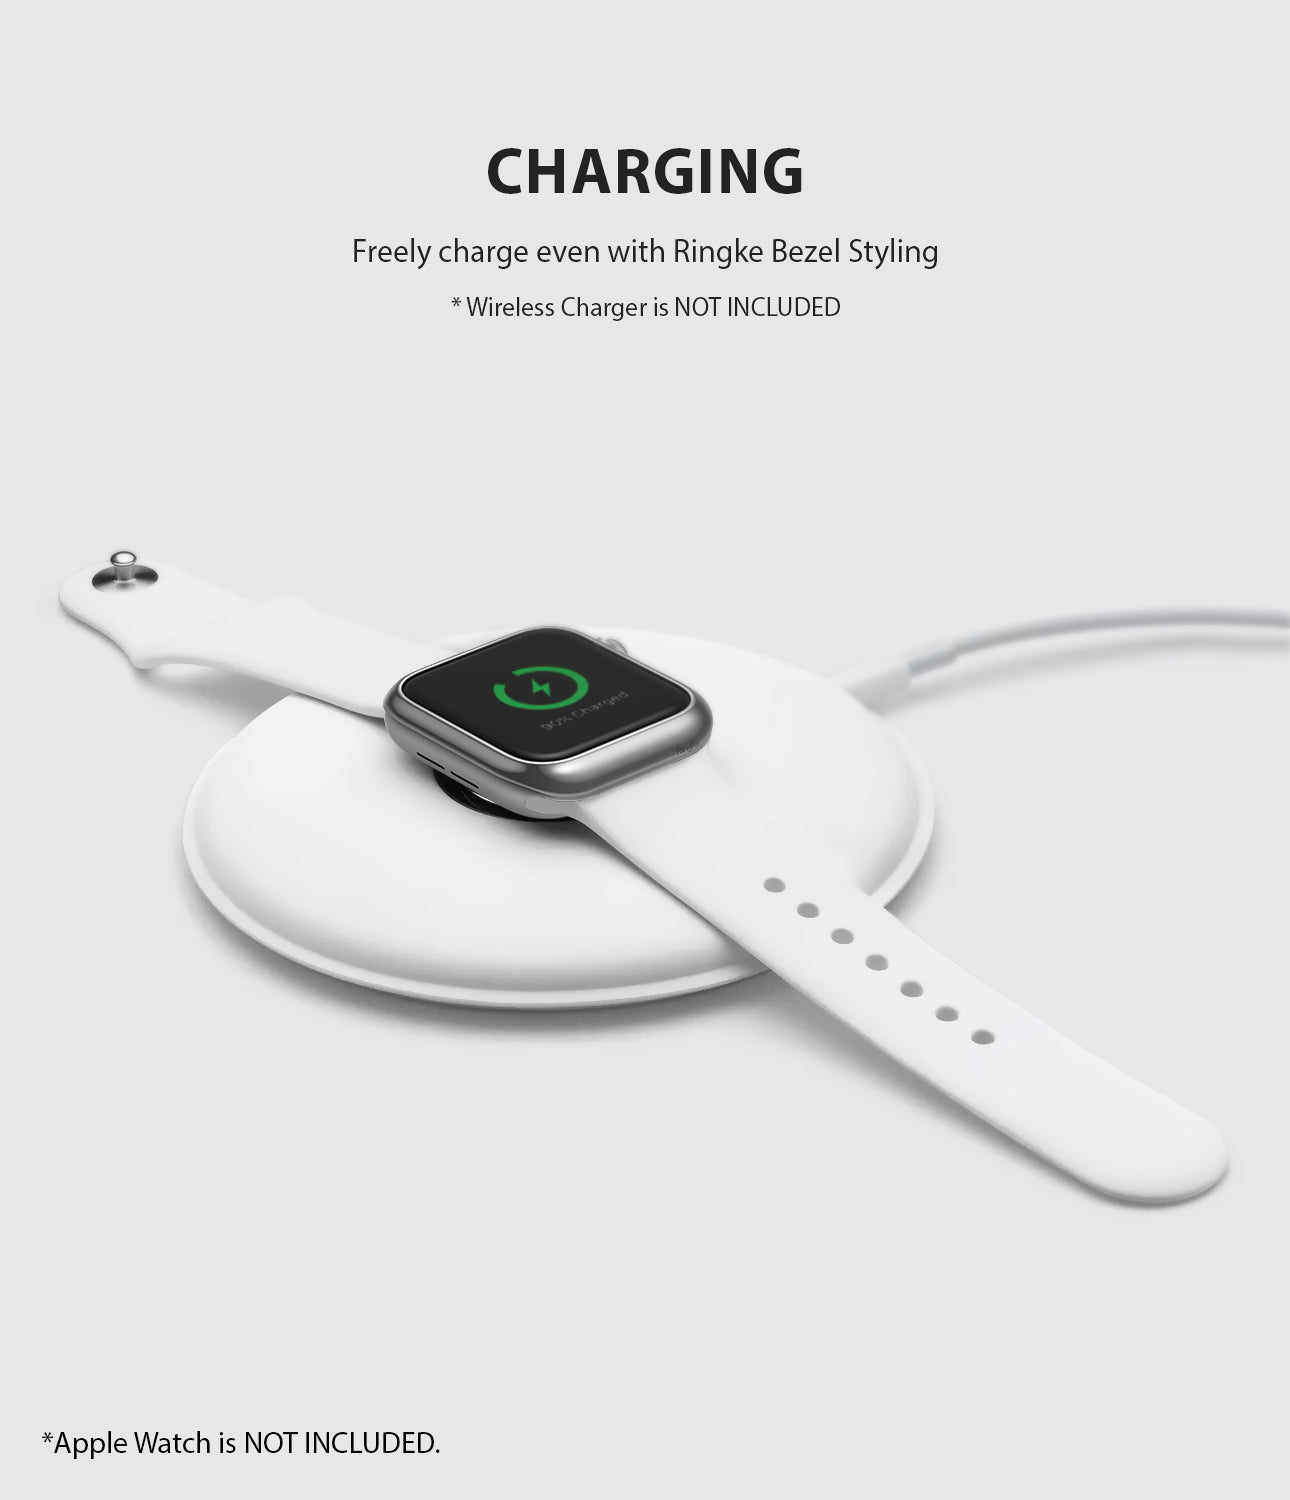 ringke bezel styling 40-01 glossy silver stainless steel on apple watch series 6 / 5 / 4 / SE 40mm wireless charging